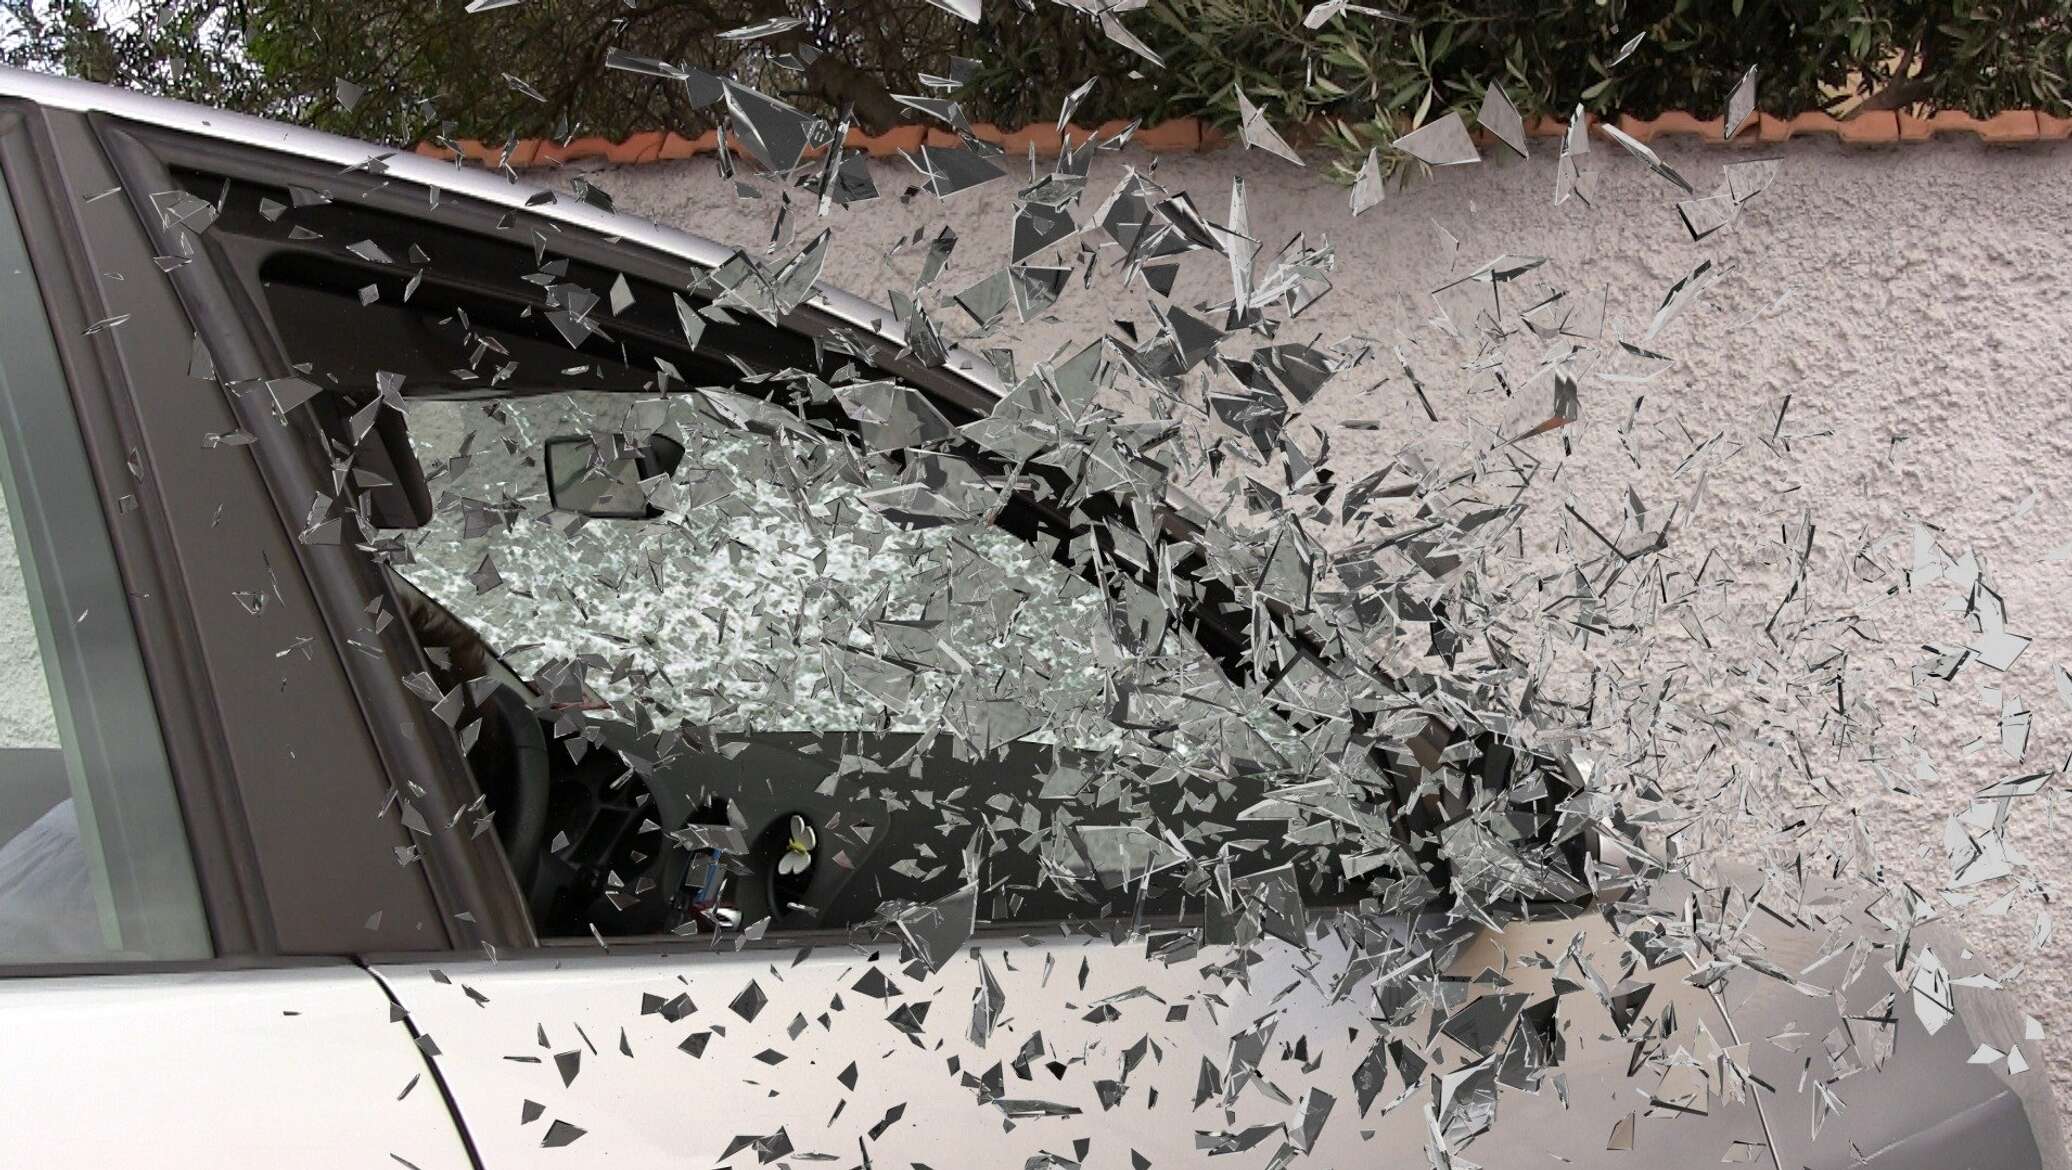 Разбитая пока. Разбитое стекло автомобиля. Машина с разбитым стеклом. Битое автомобильное стекло. Разбитые стекла в машине.